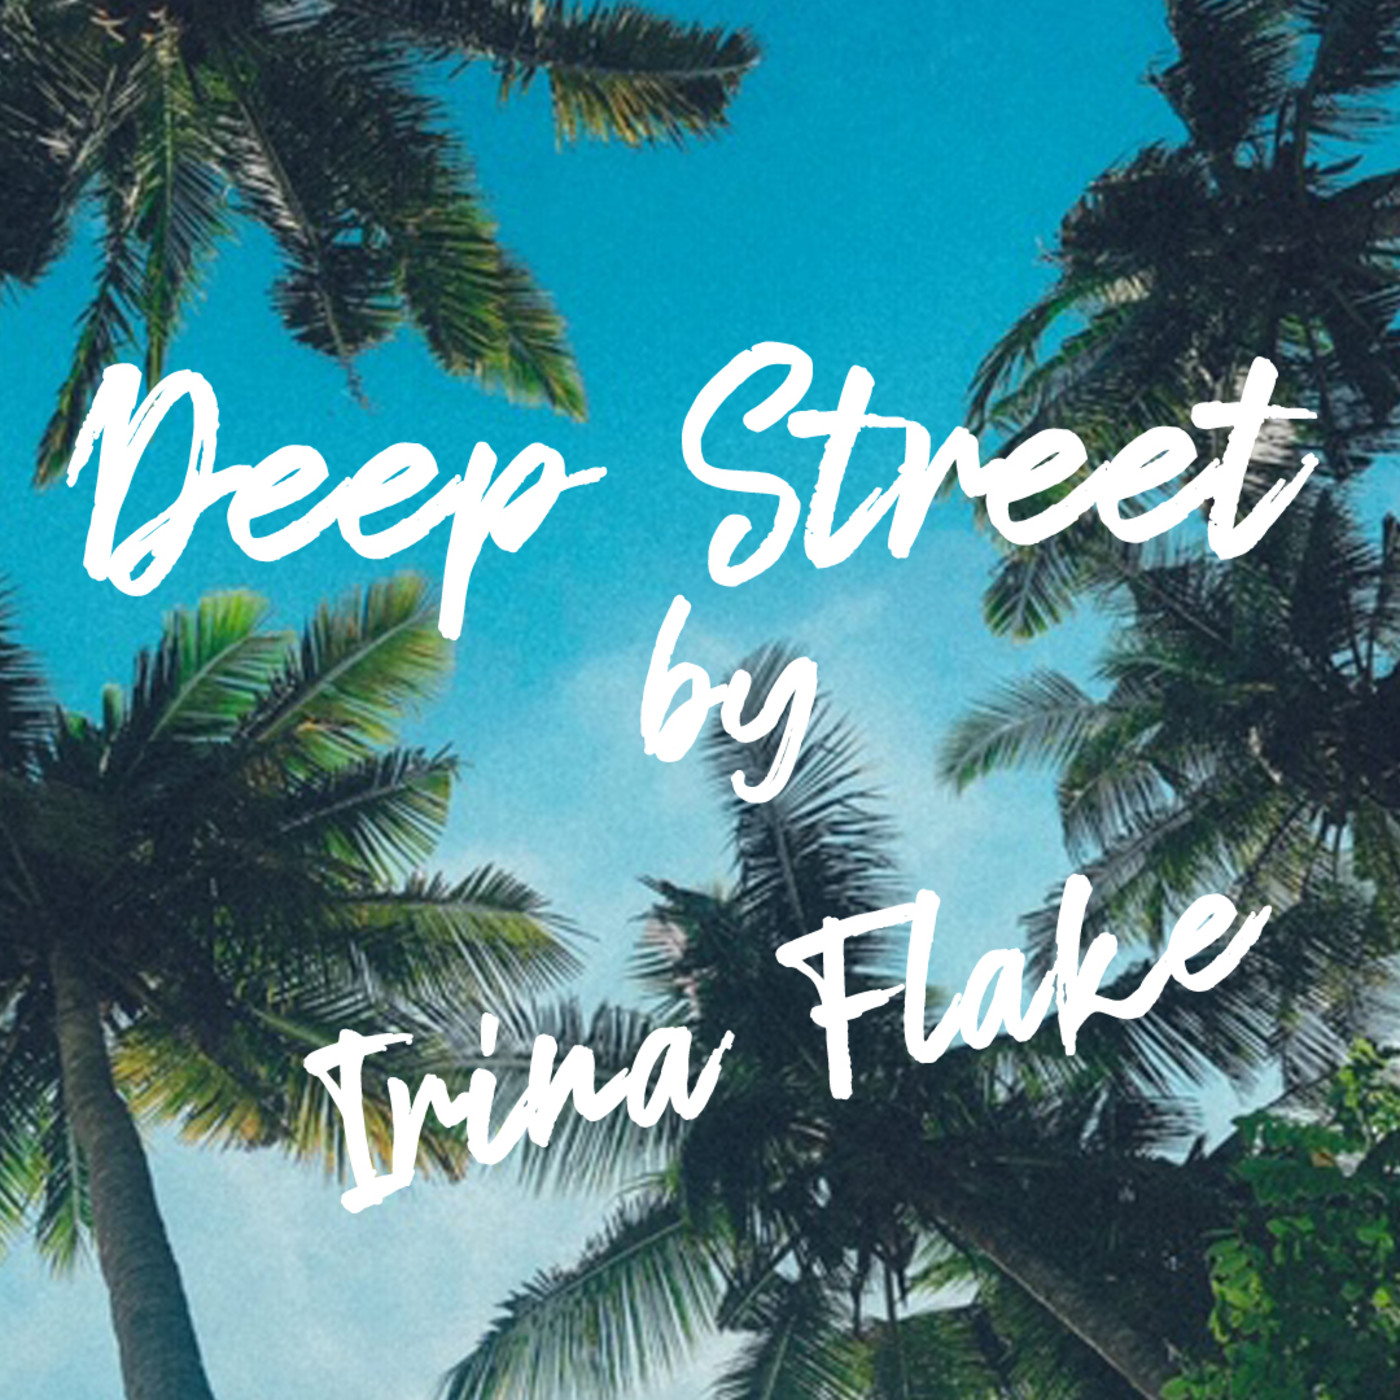 Deep Street by Irina Flake 02 @ Flaix FM 07.04.19